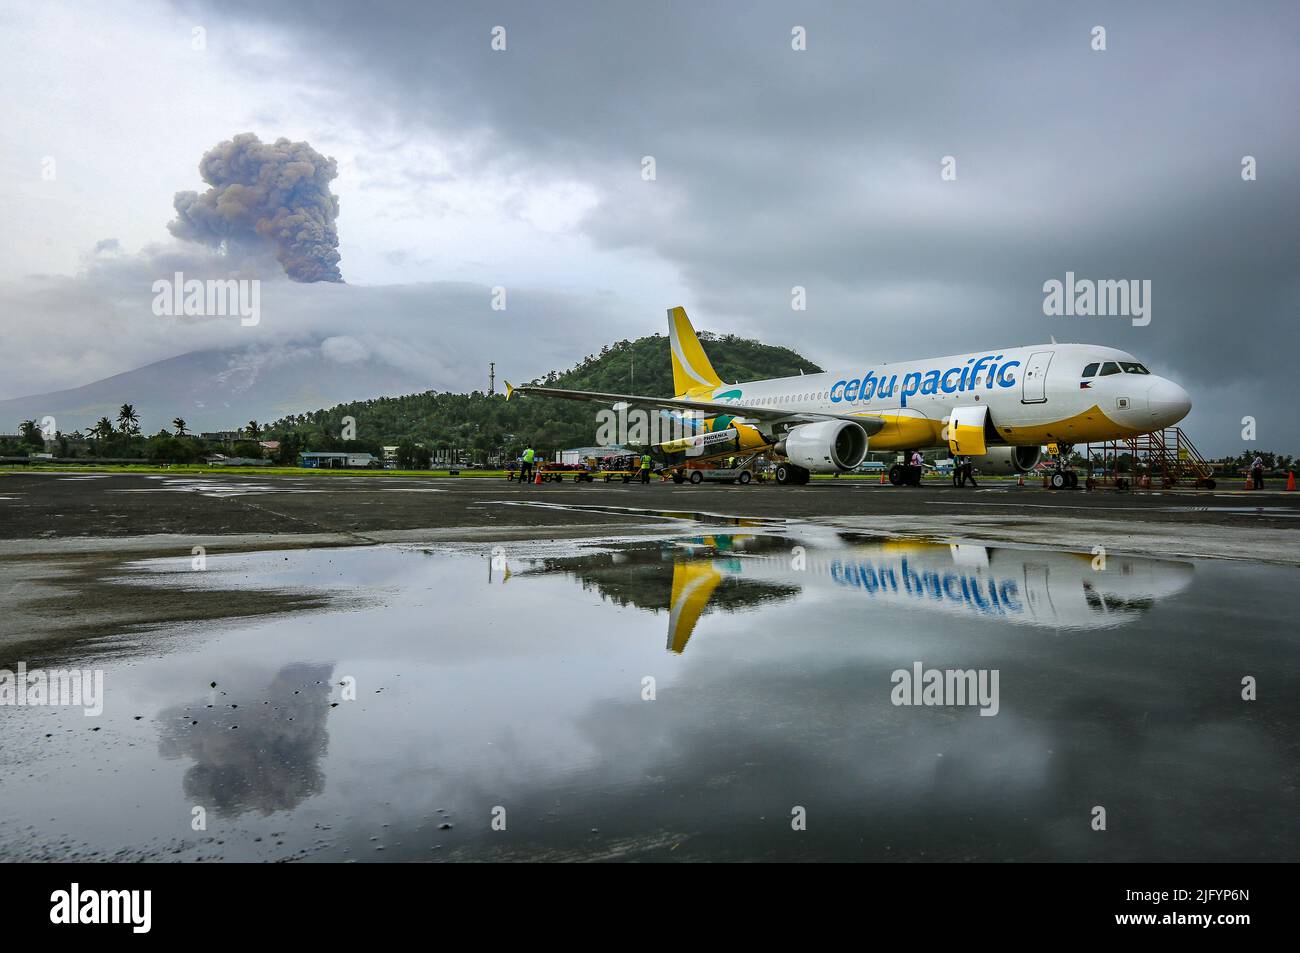 Erupting Mayon volcano, Cebu Pacific plane reflection in Legazpi airport, Bicol, Philippines natural disaster, Philippine volcanic explosive eruption Stock Photo